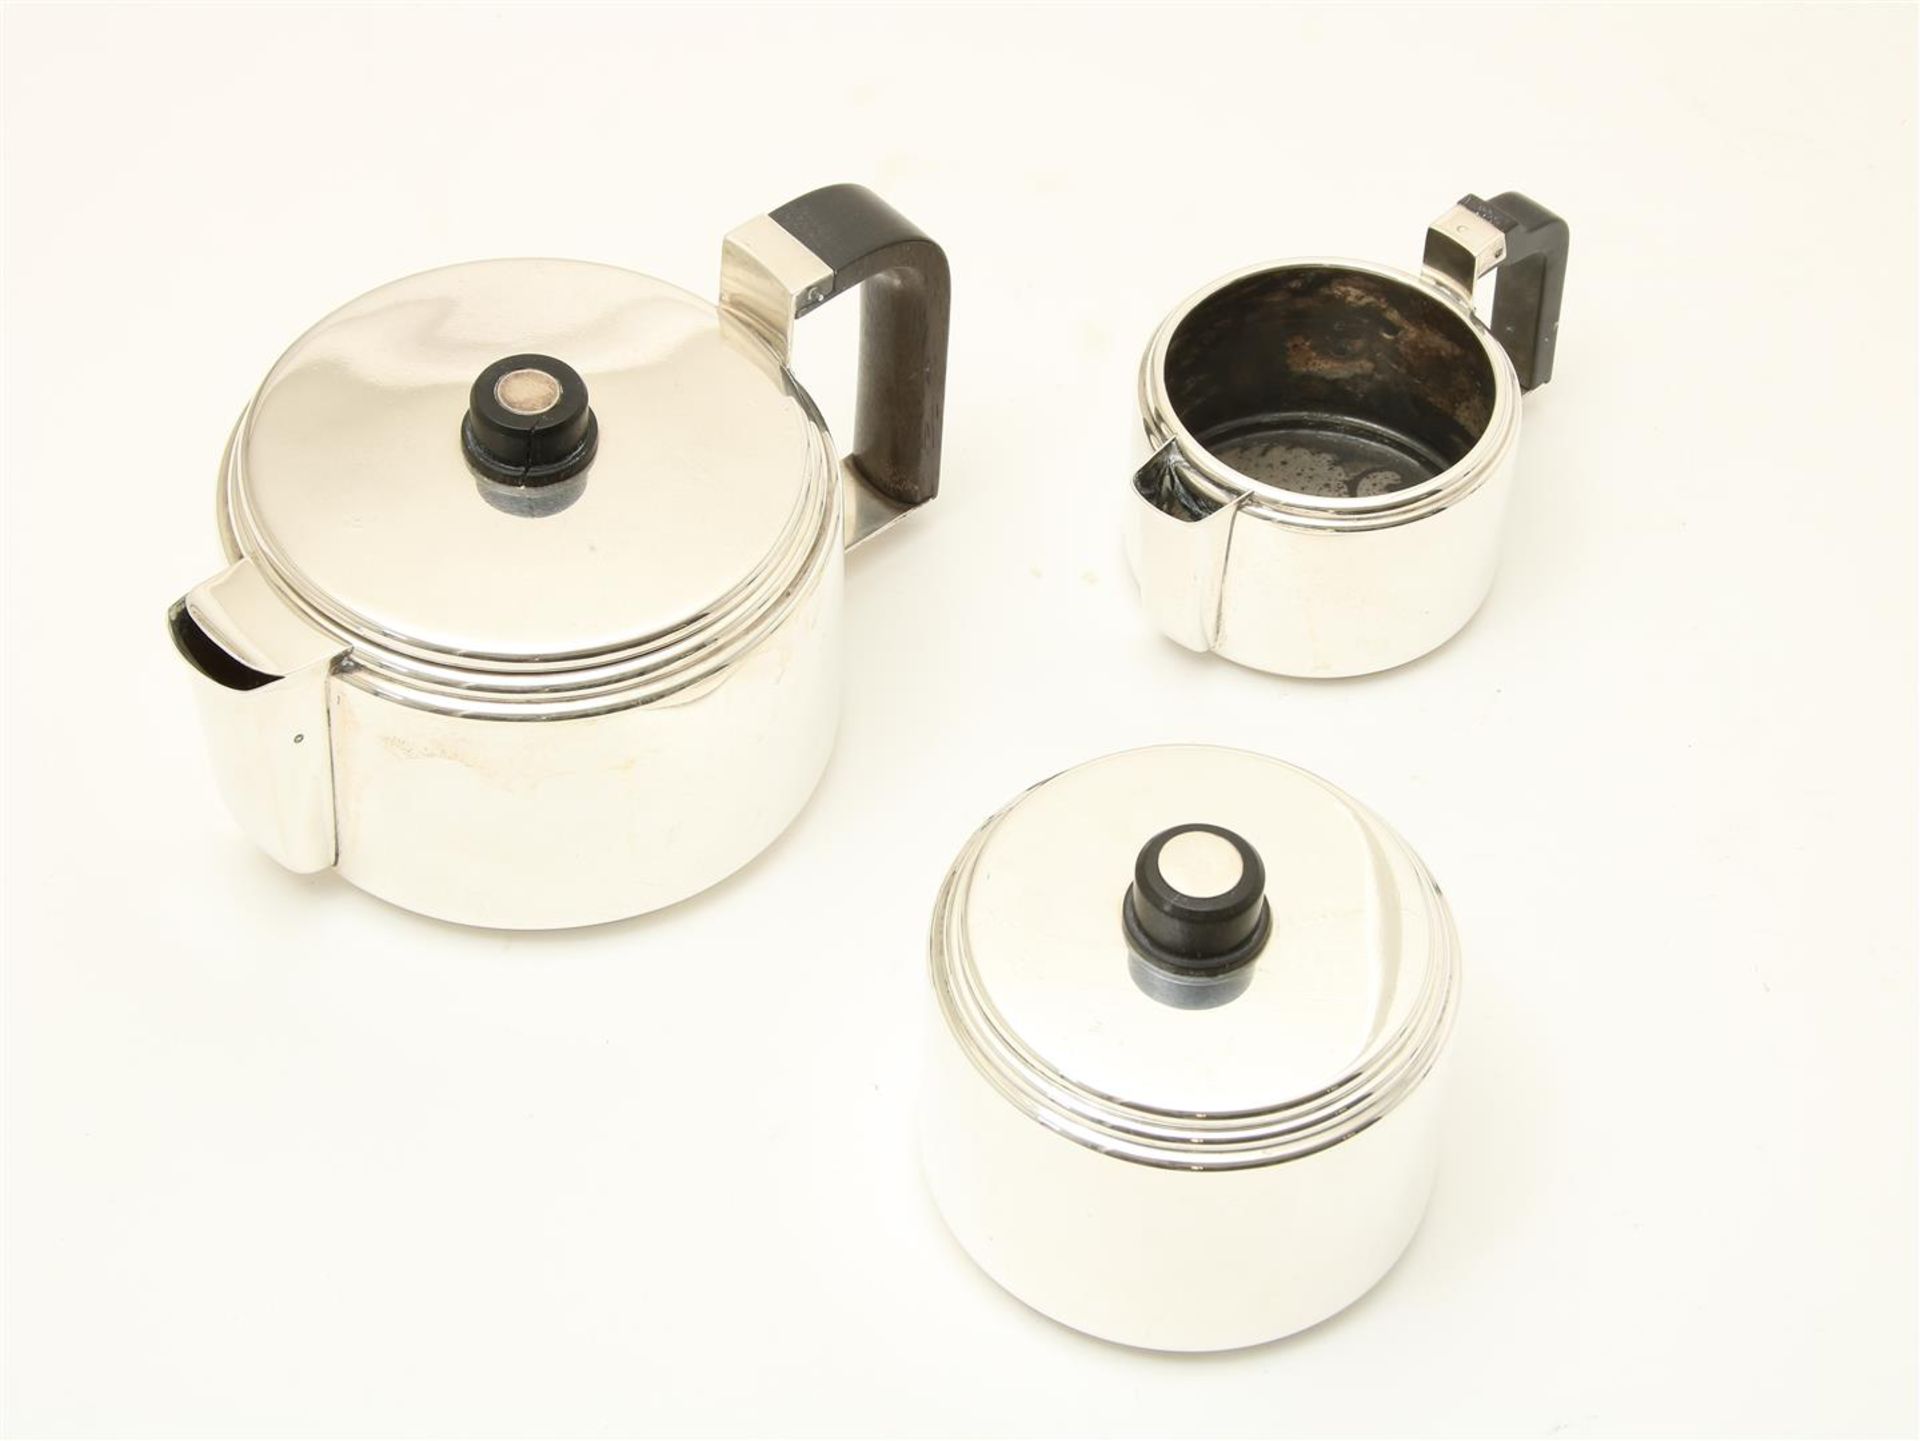 Silver Art Deco tea set with ebony handle and knob, grade 835/000, designer mark: "CE": Christa